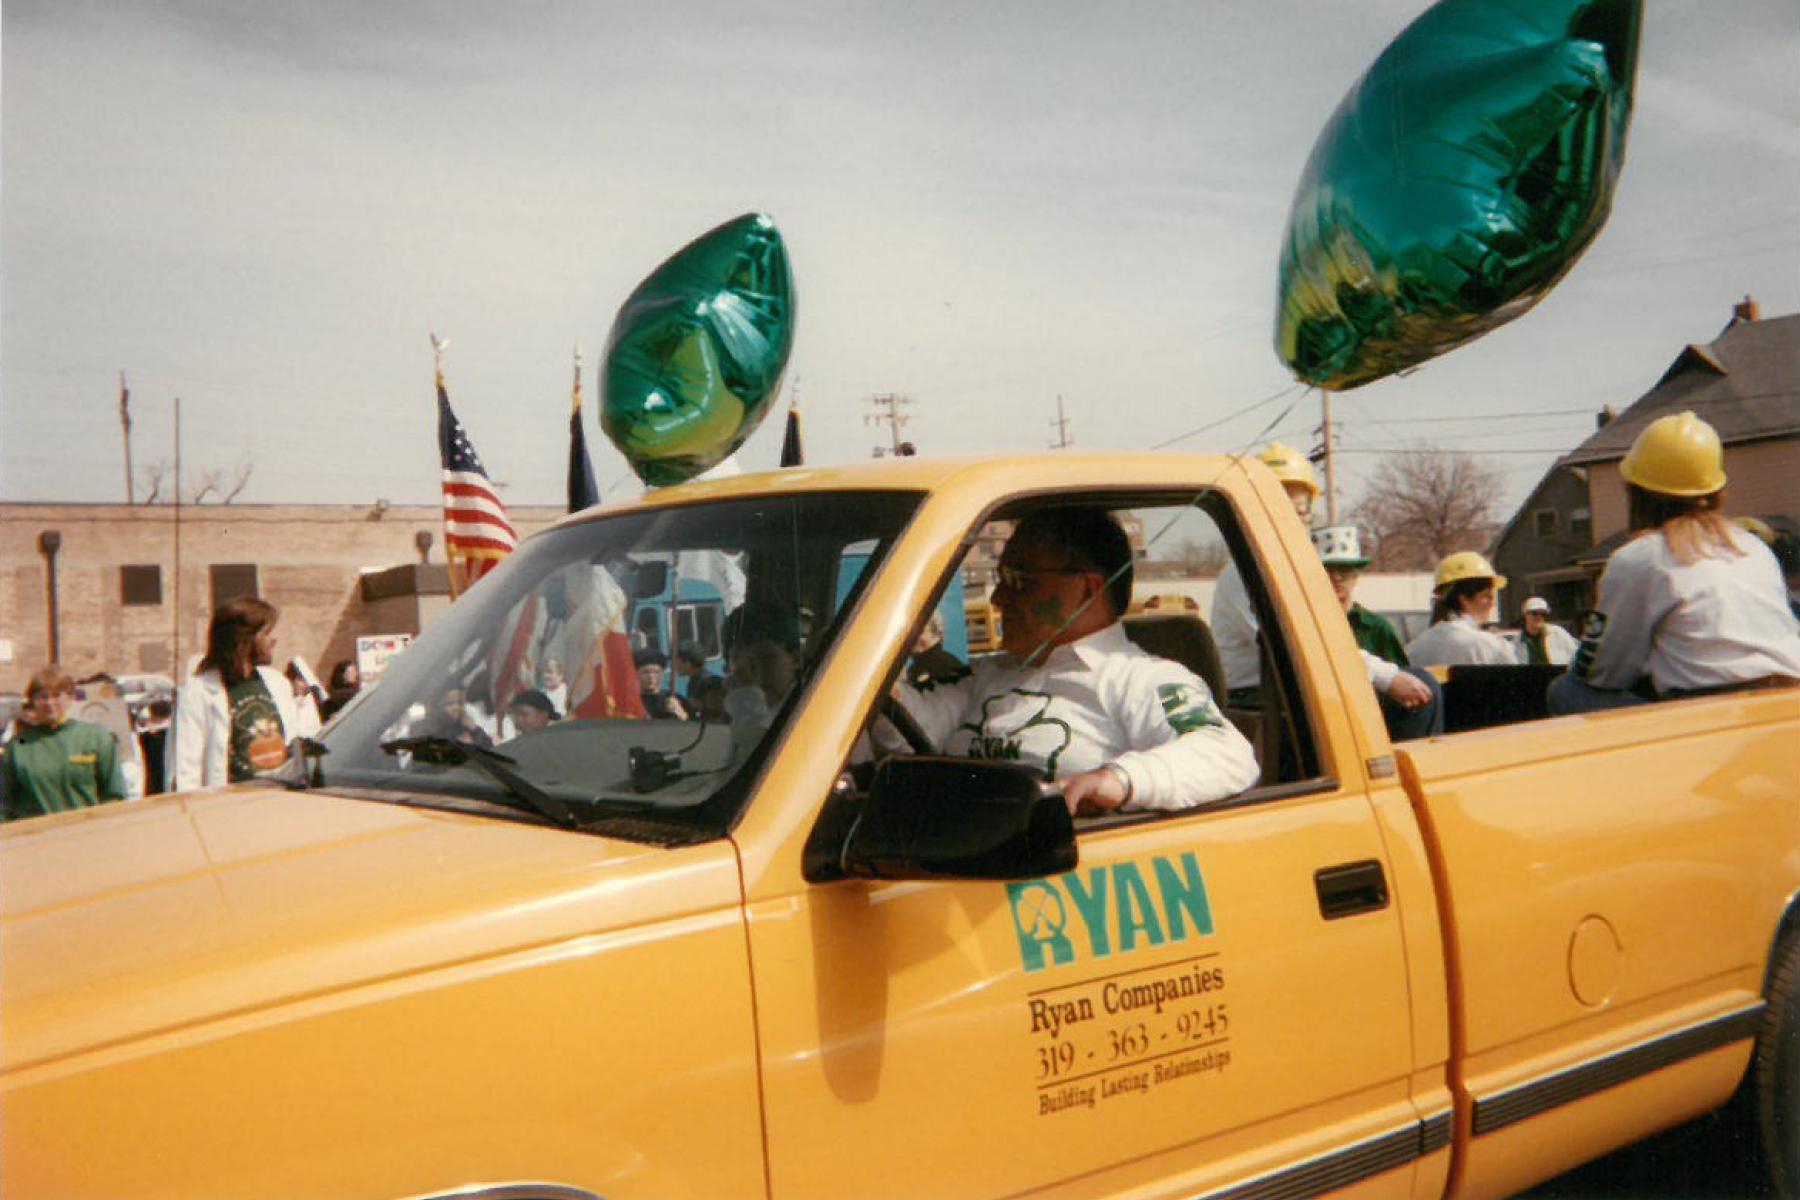 Ryan Companies St. Patrick's Day Parade 1996